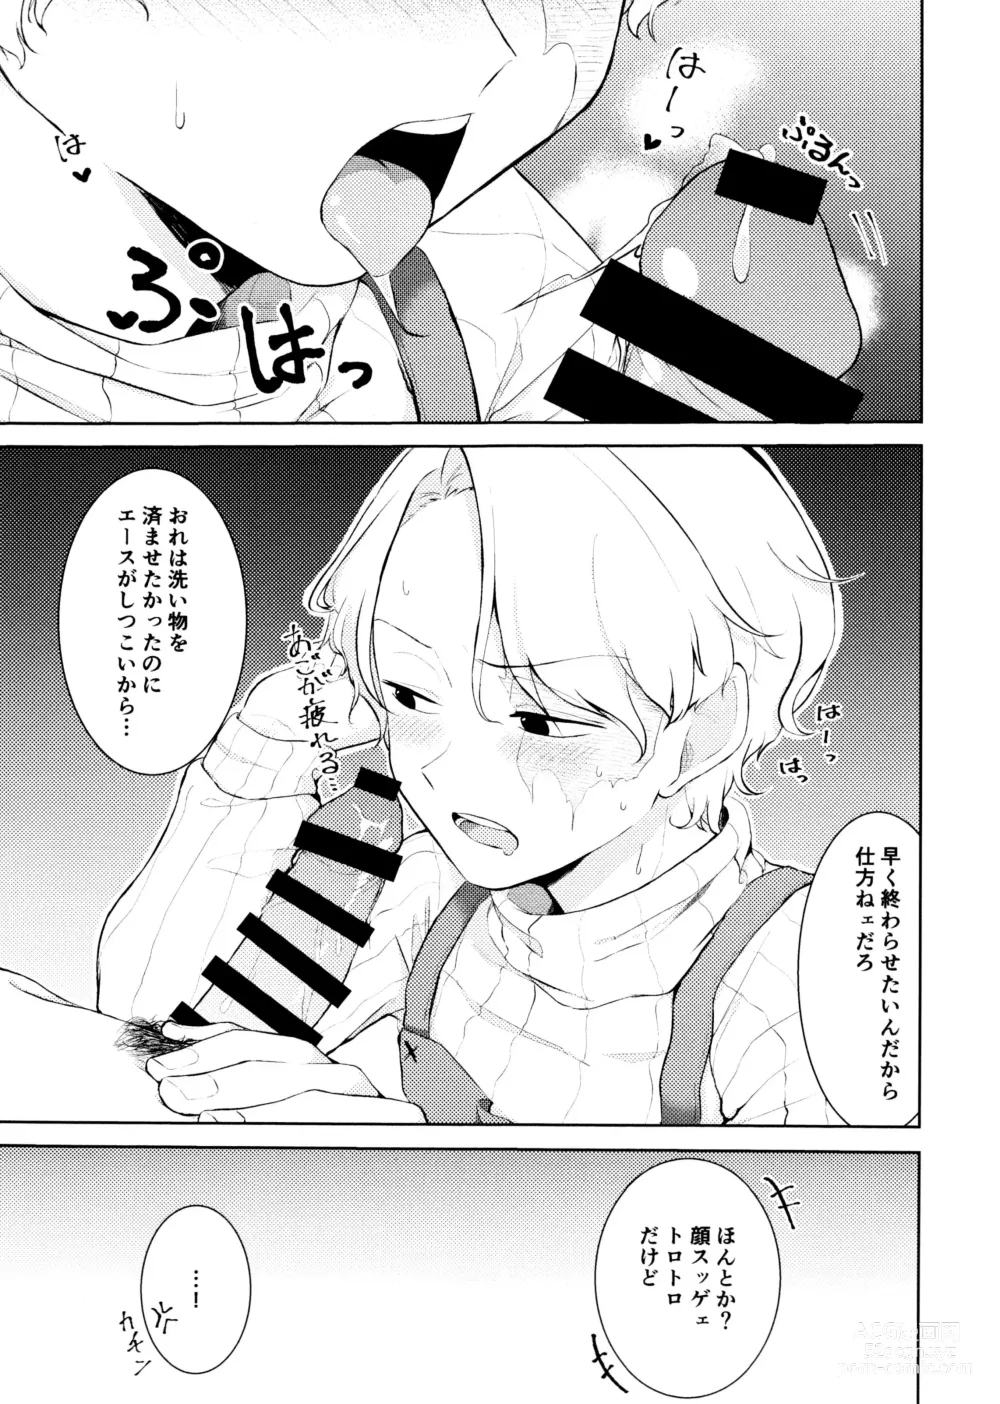 Page 9 of doujinshi Fuyu to Knit to Apron to